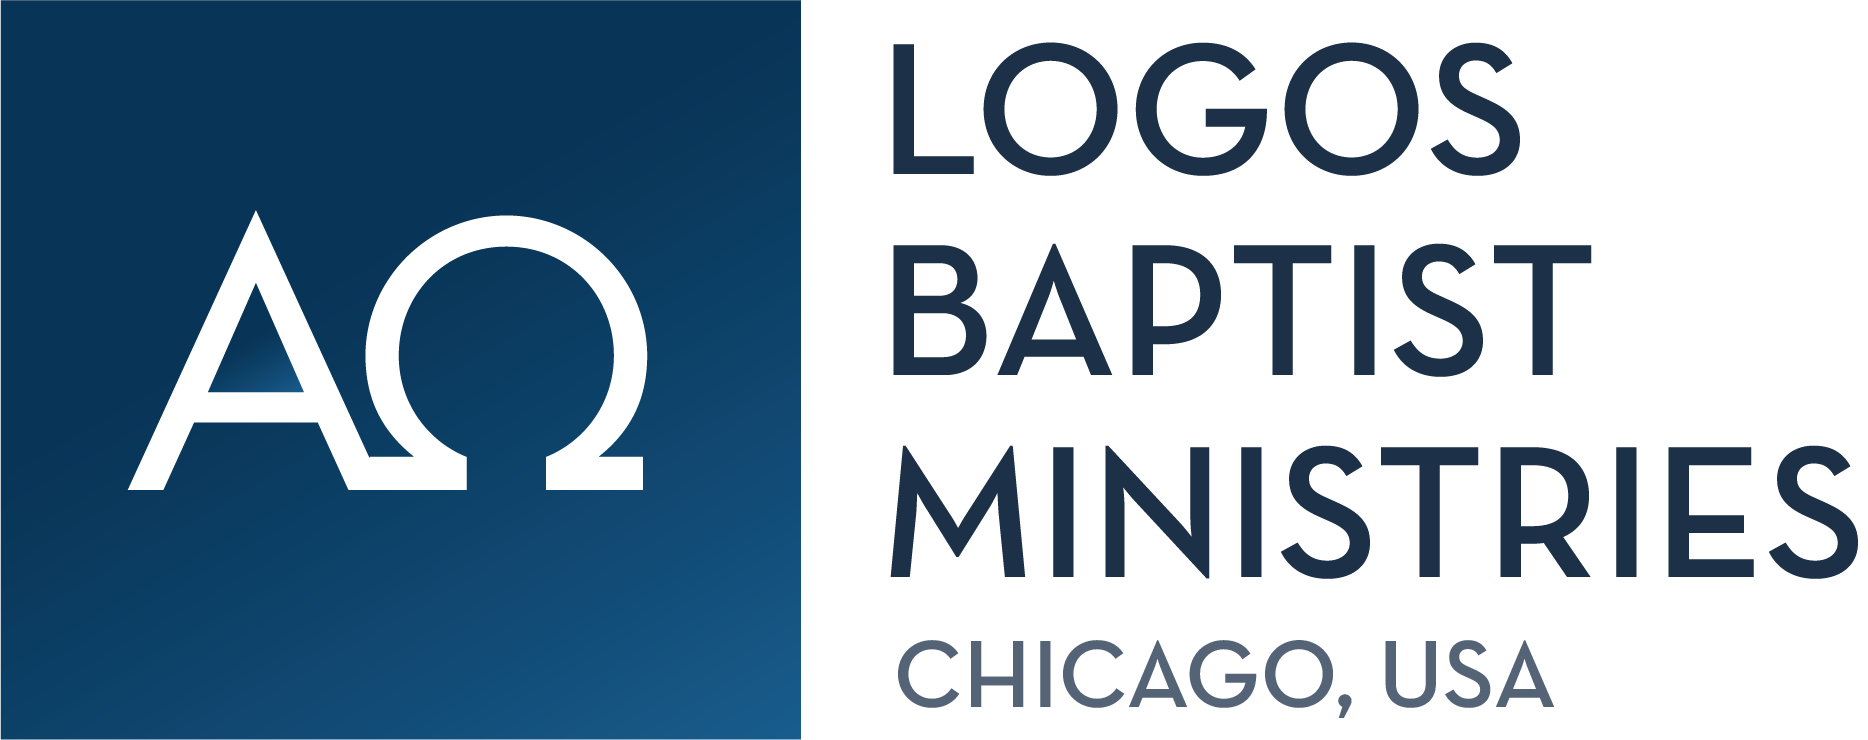 Logos Baptist Ministries - Chicago, USA